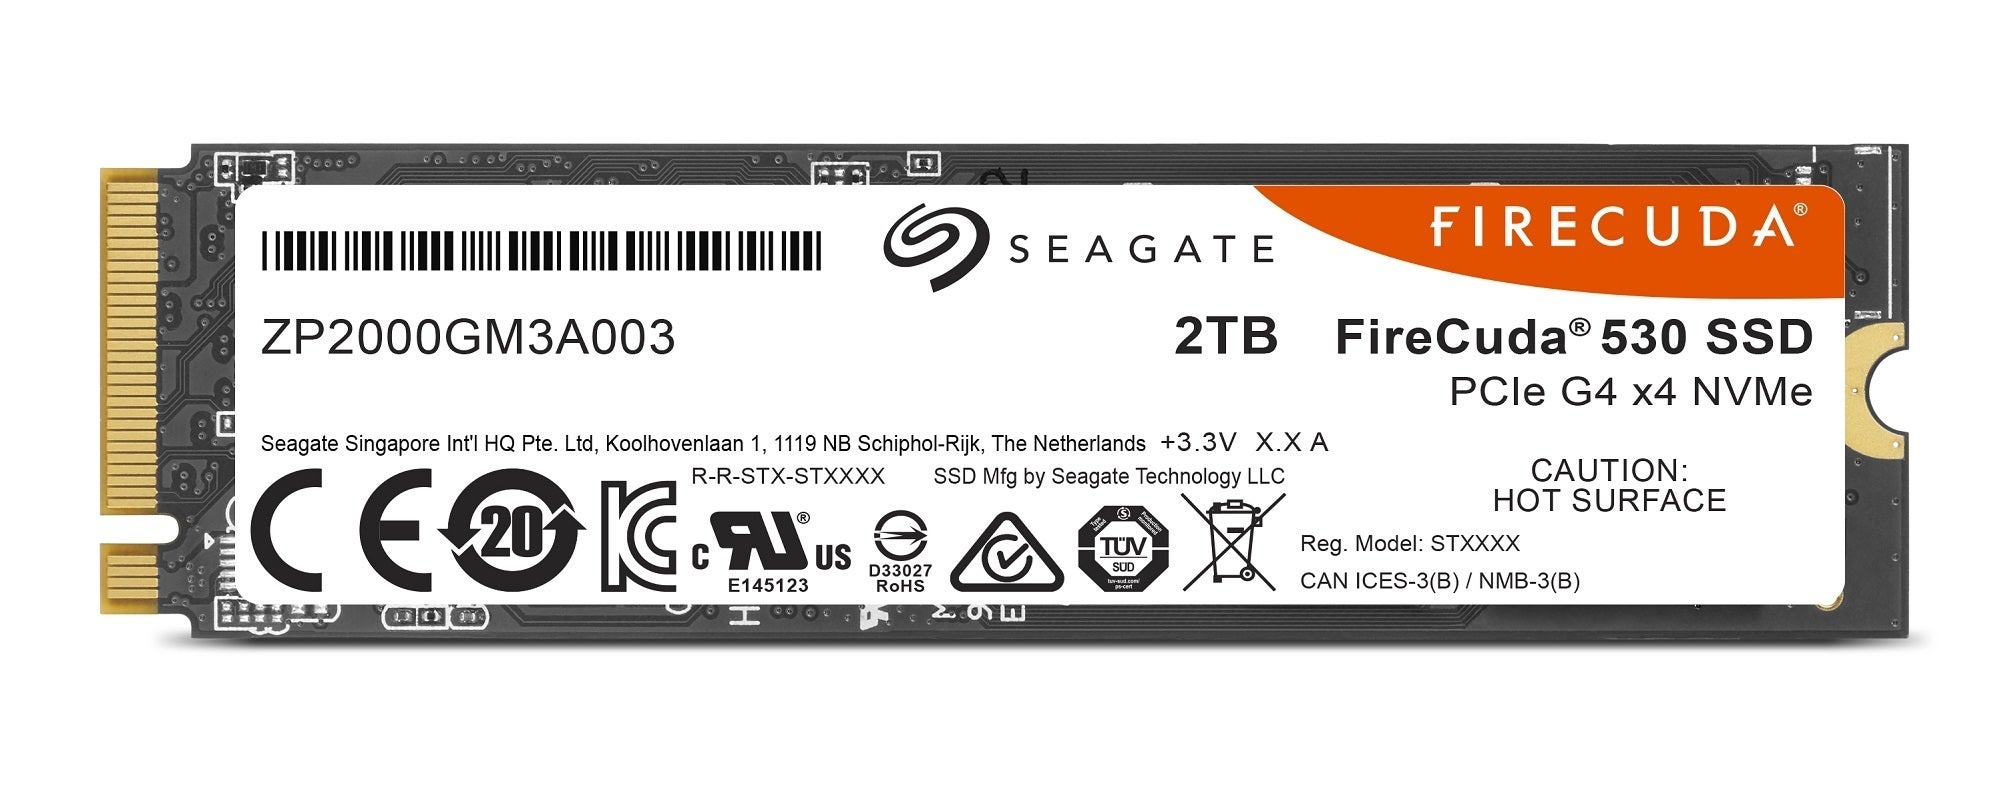 Seagate Firecuda 530 review